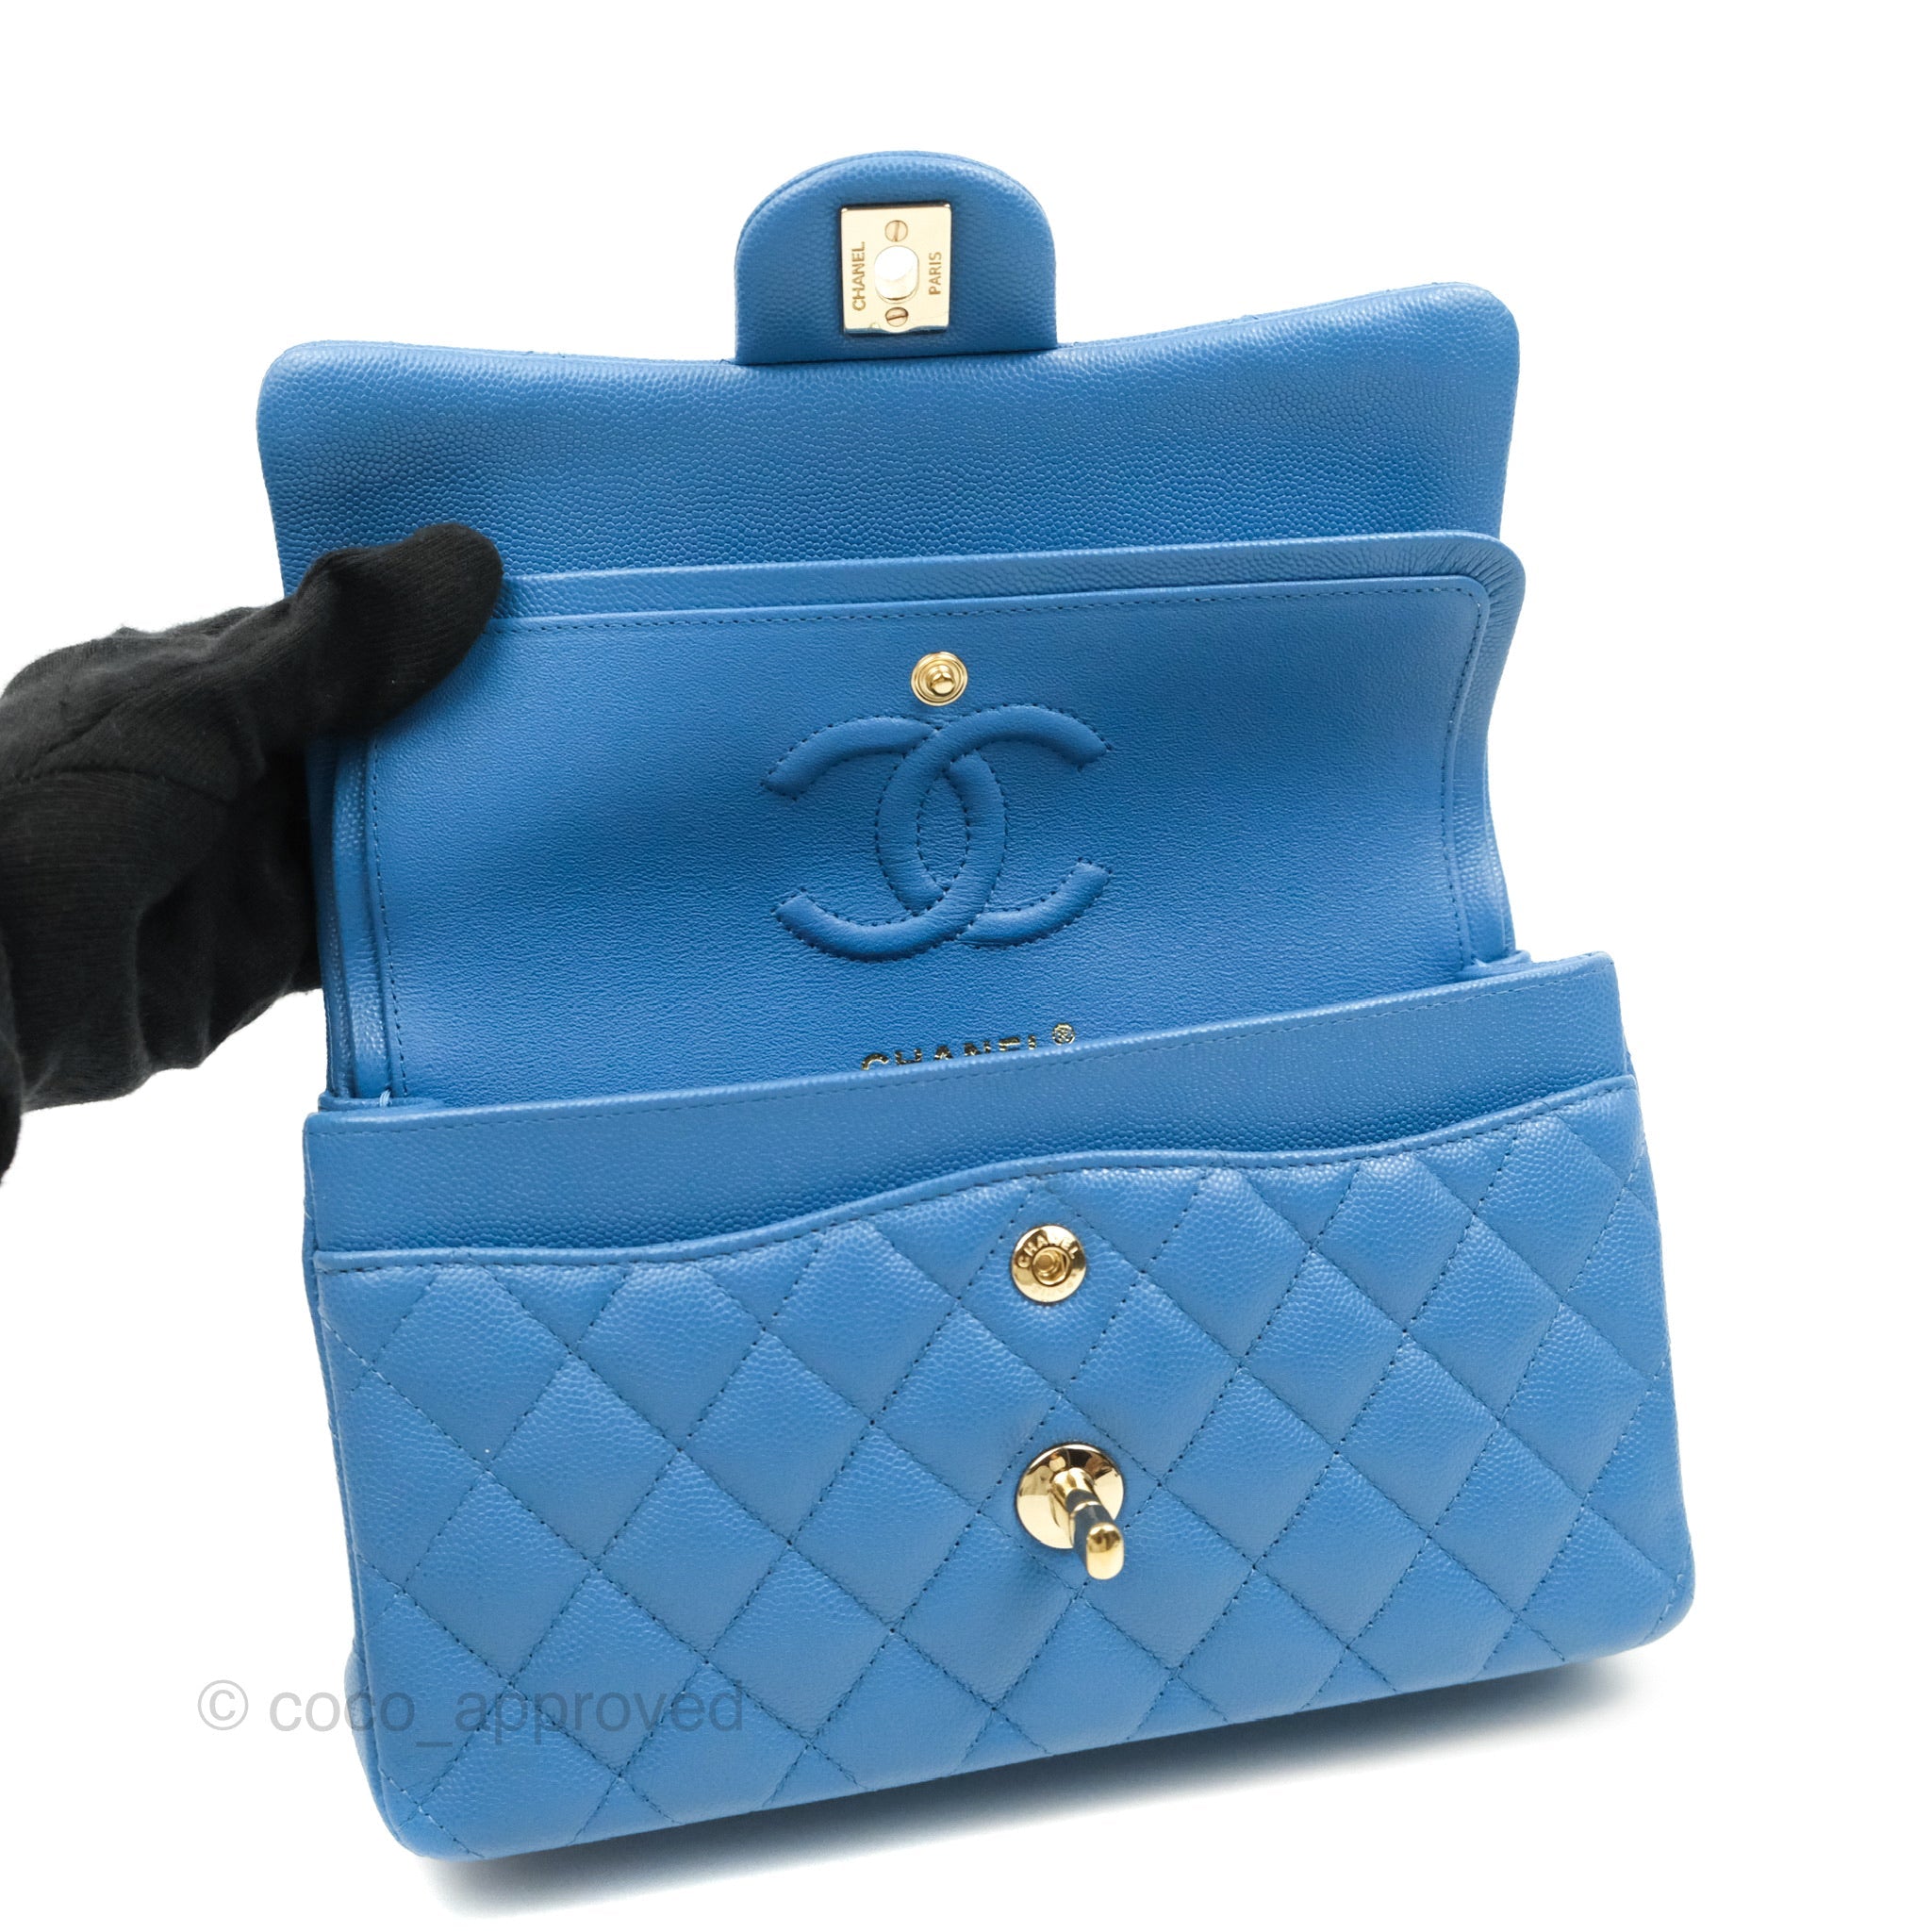 blue chanel mini bag